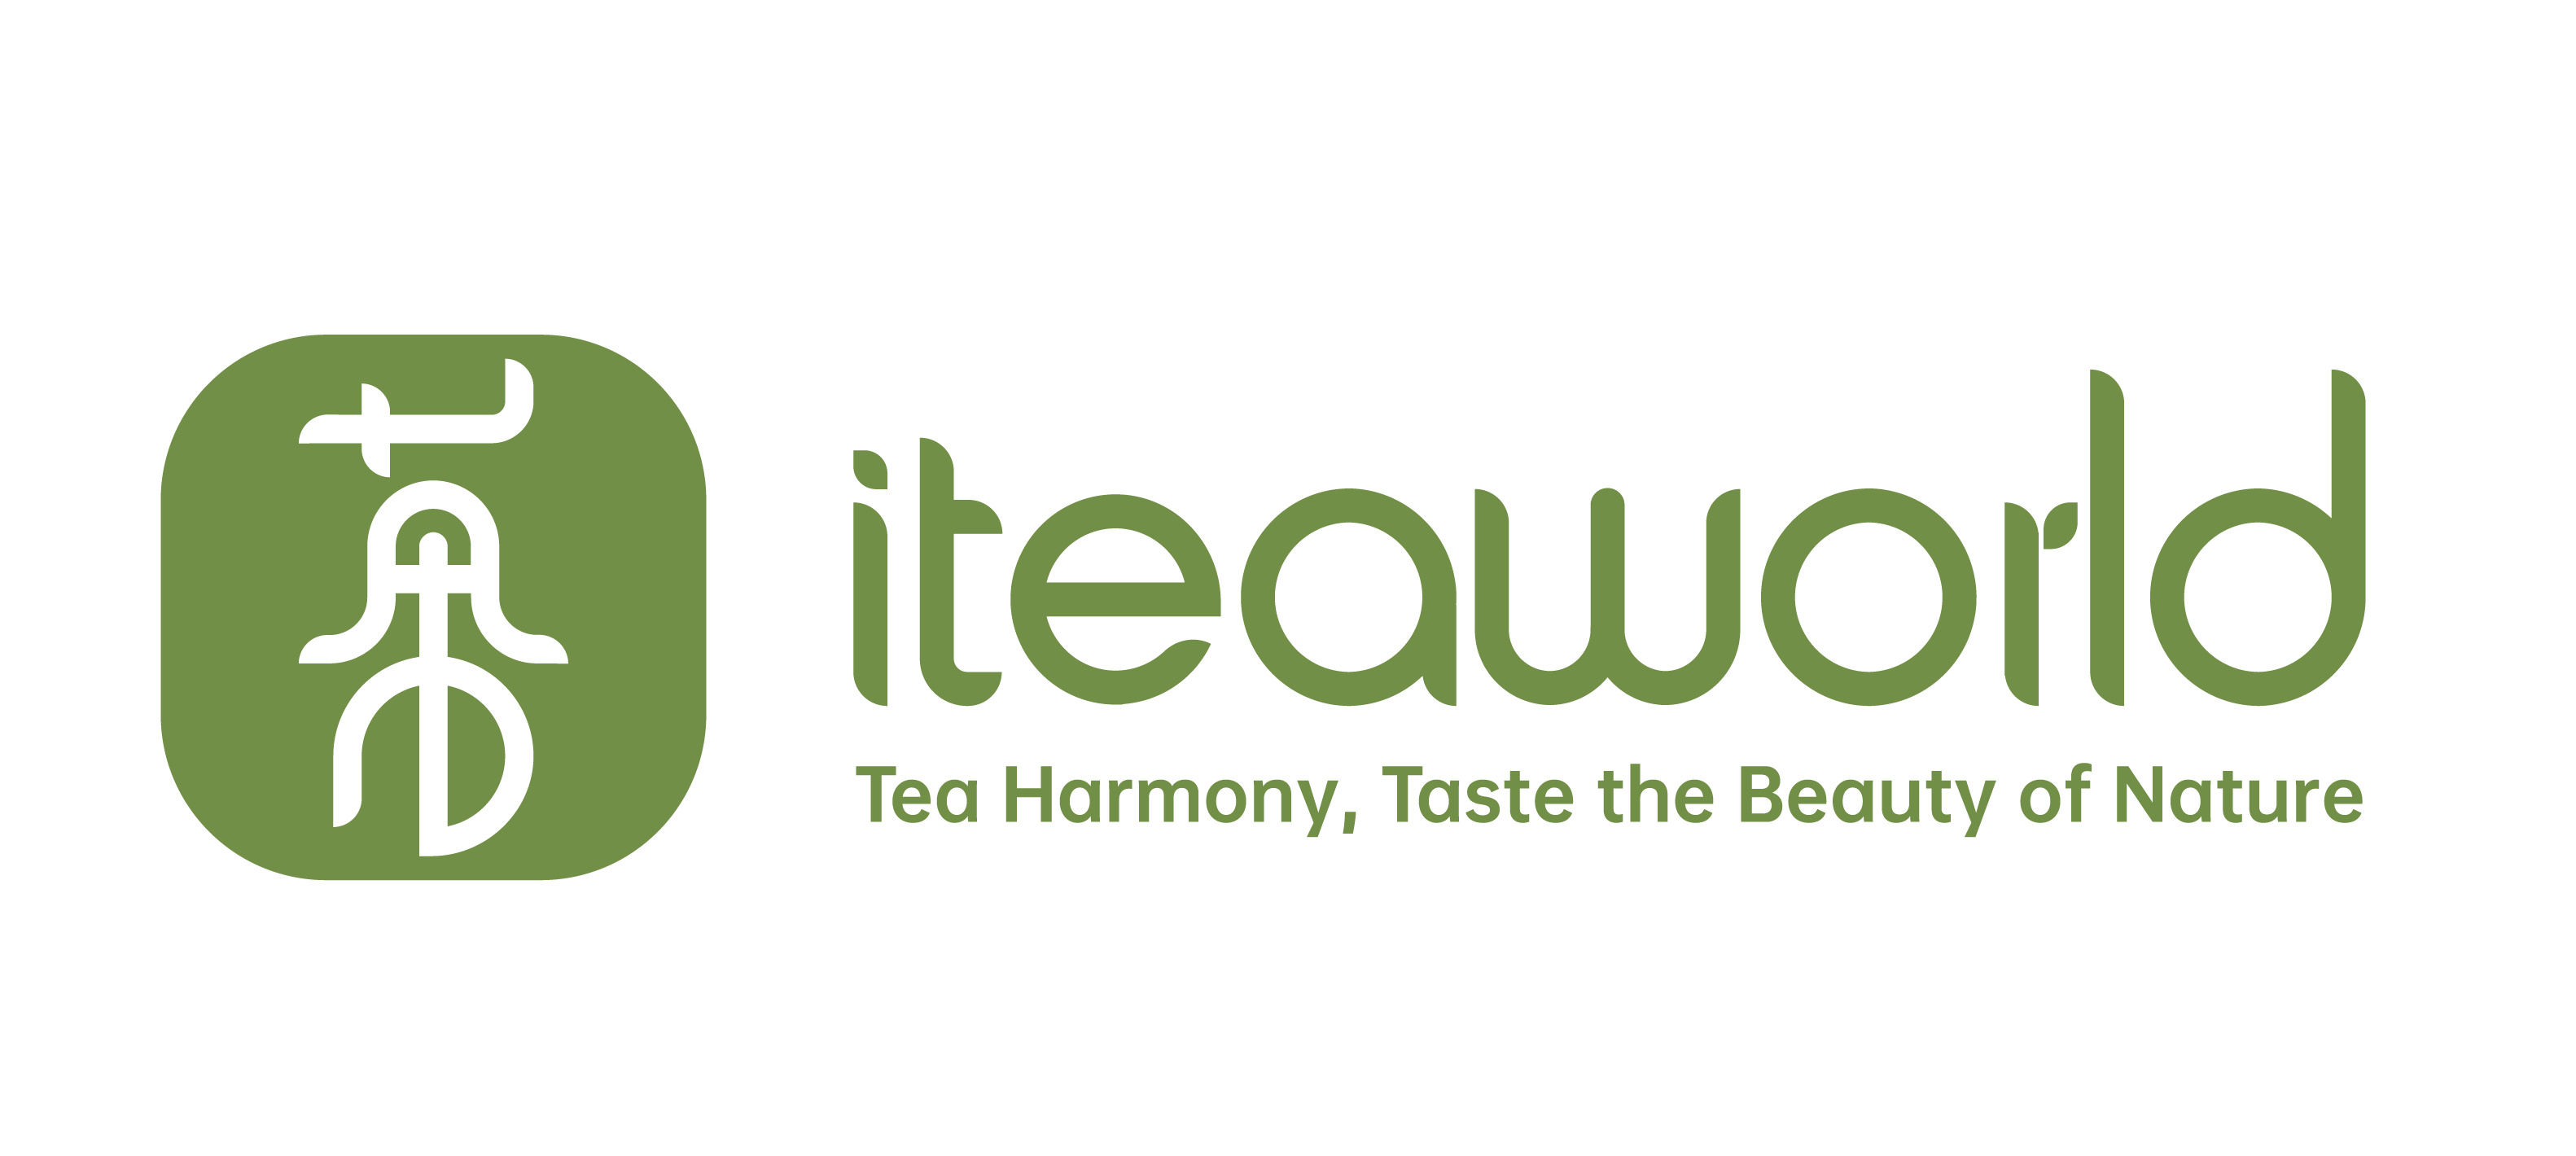 iTeaworld logo